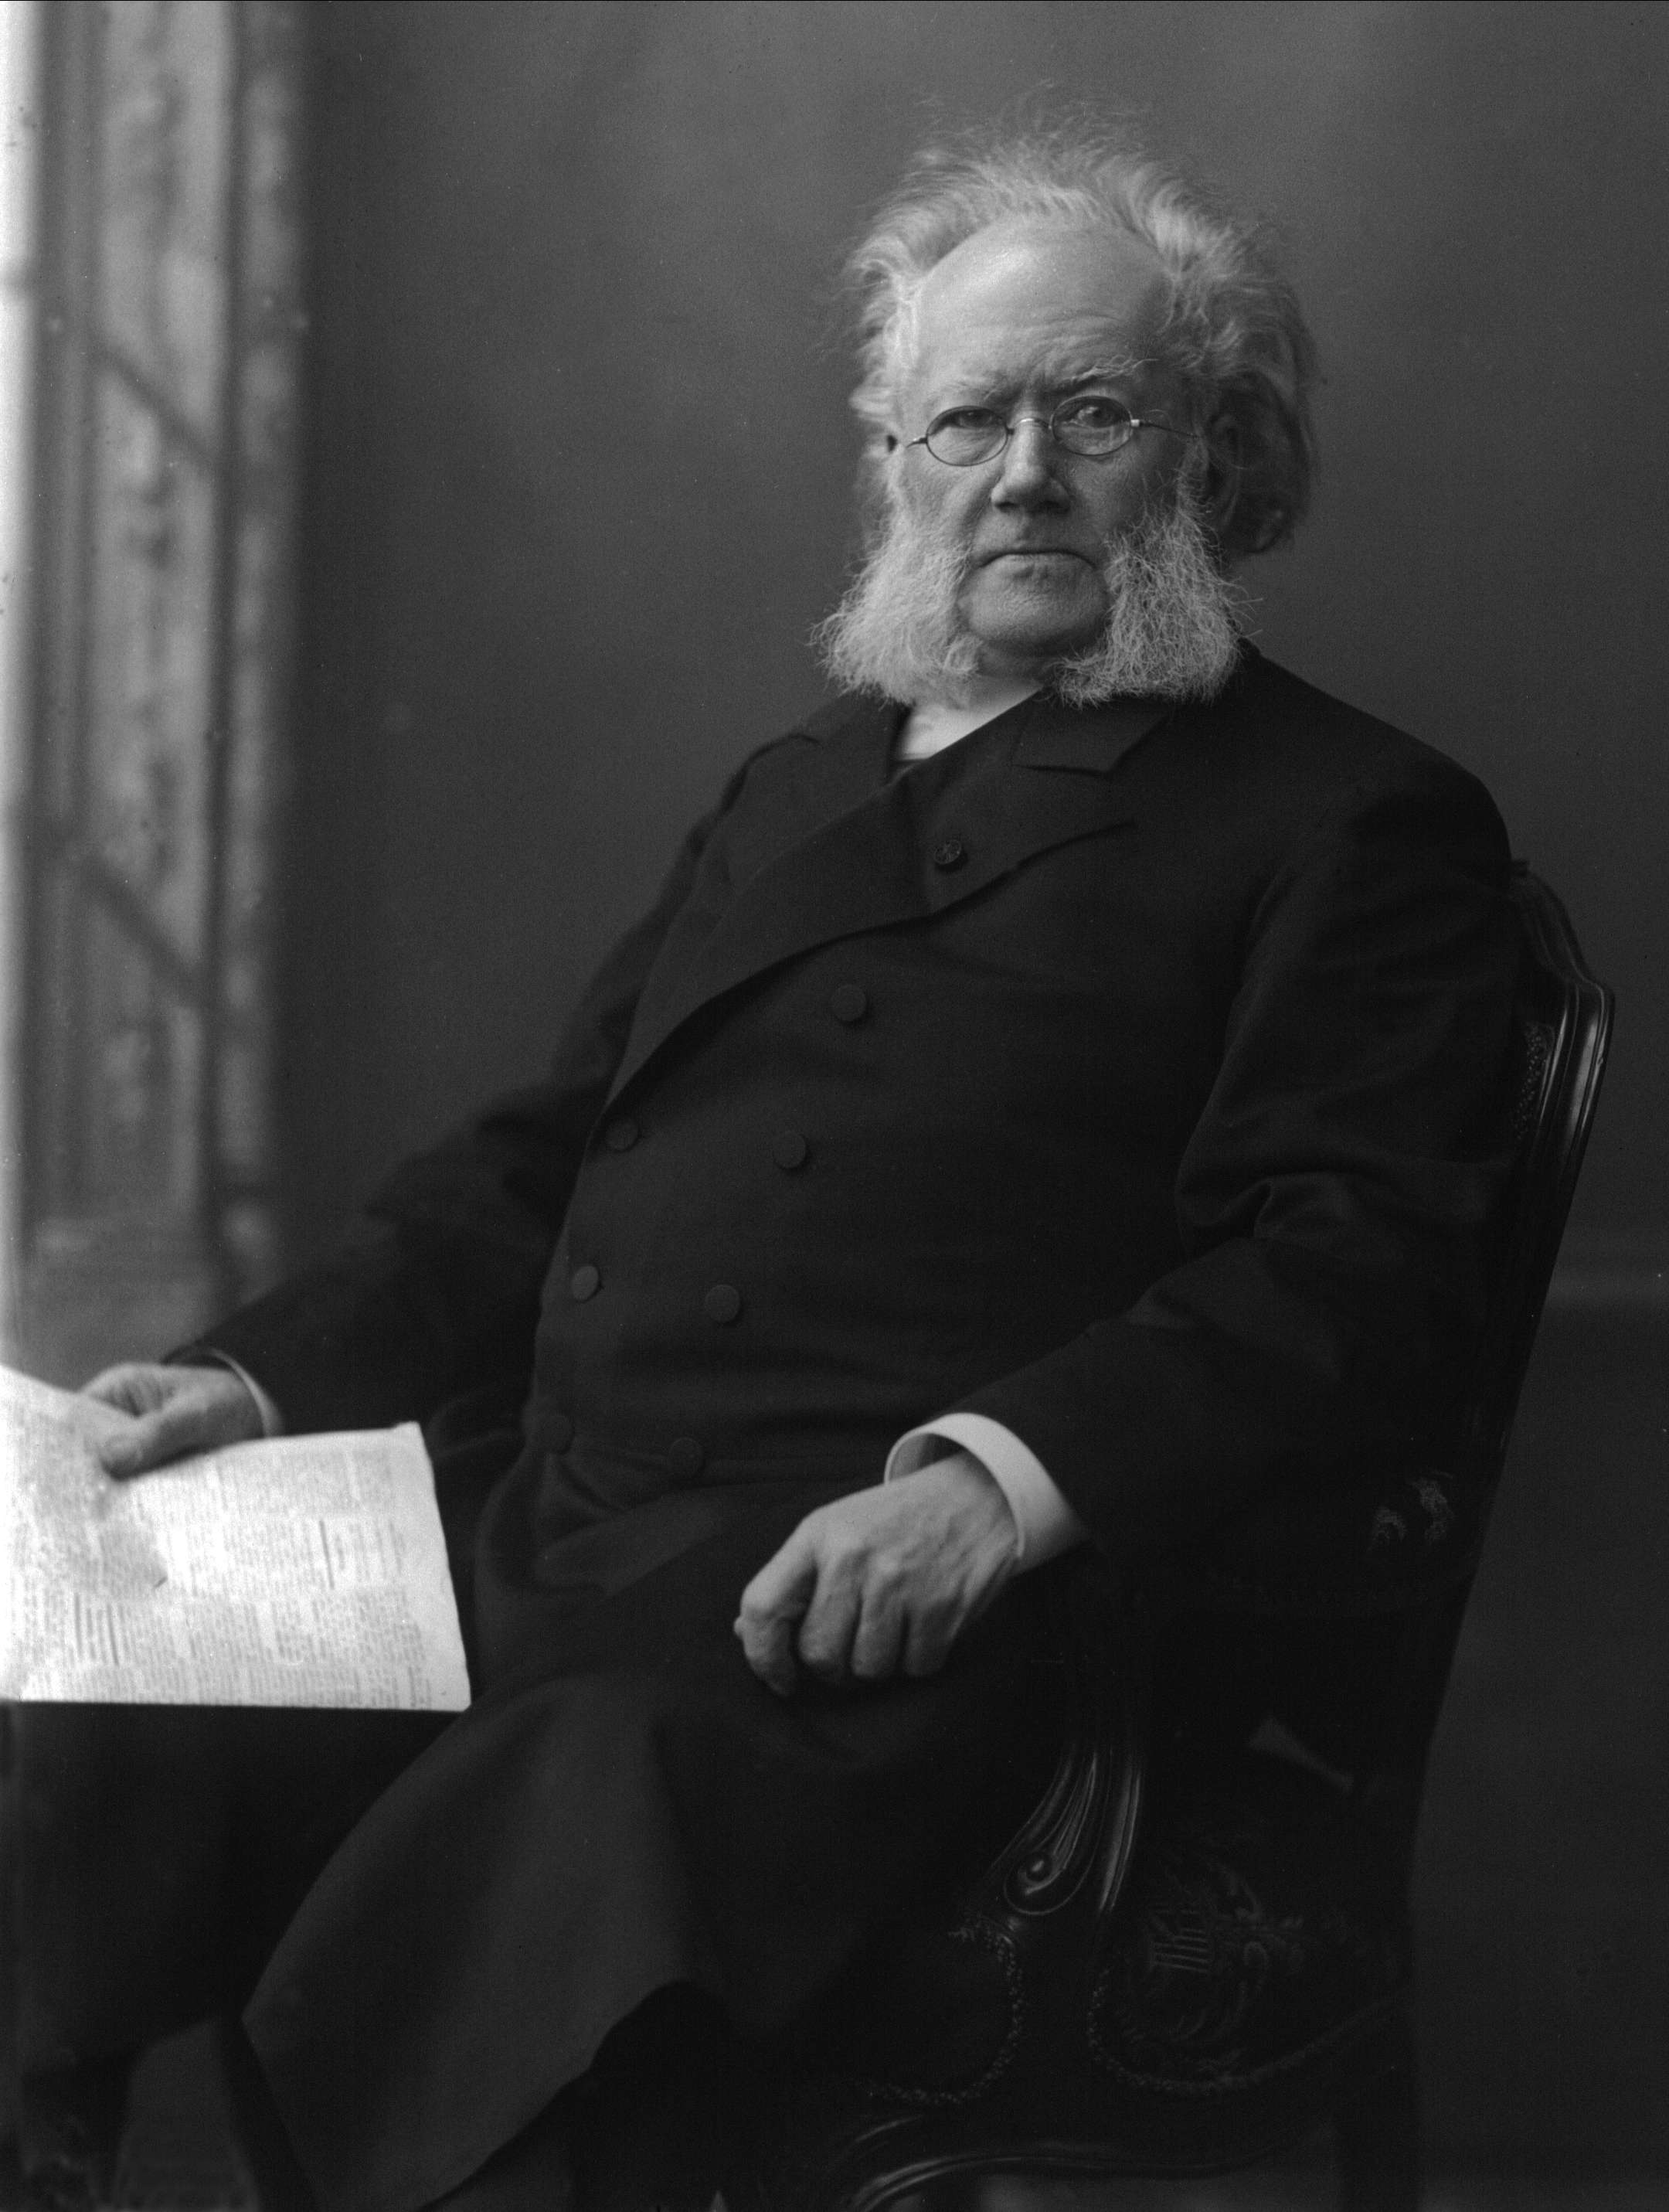 Henrik Ibsen Image public domain